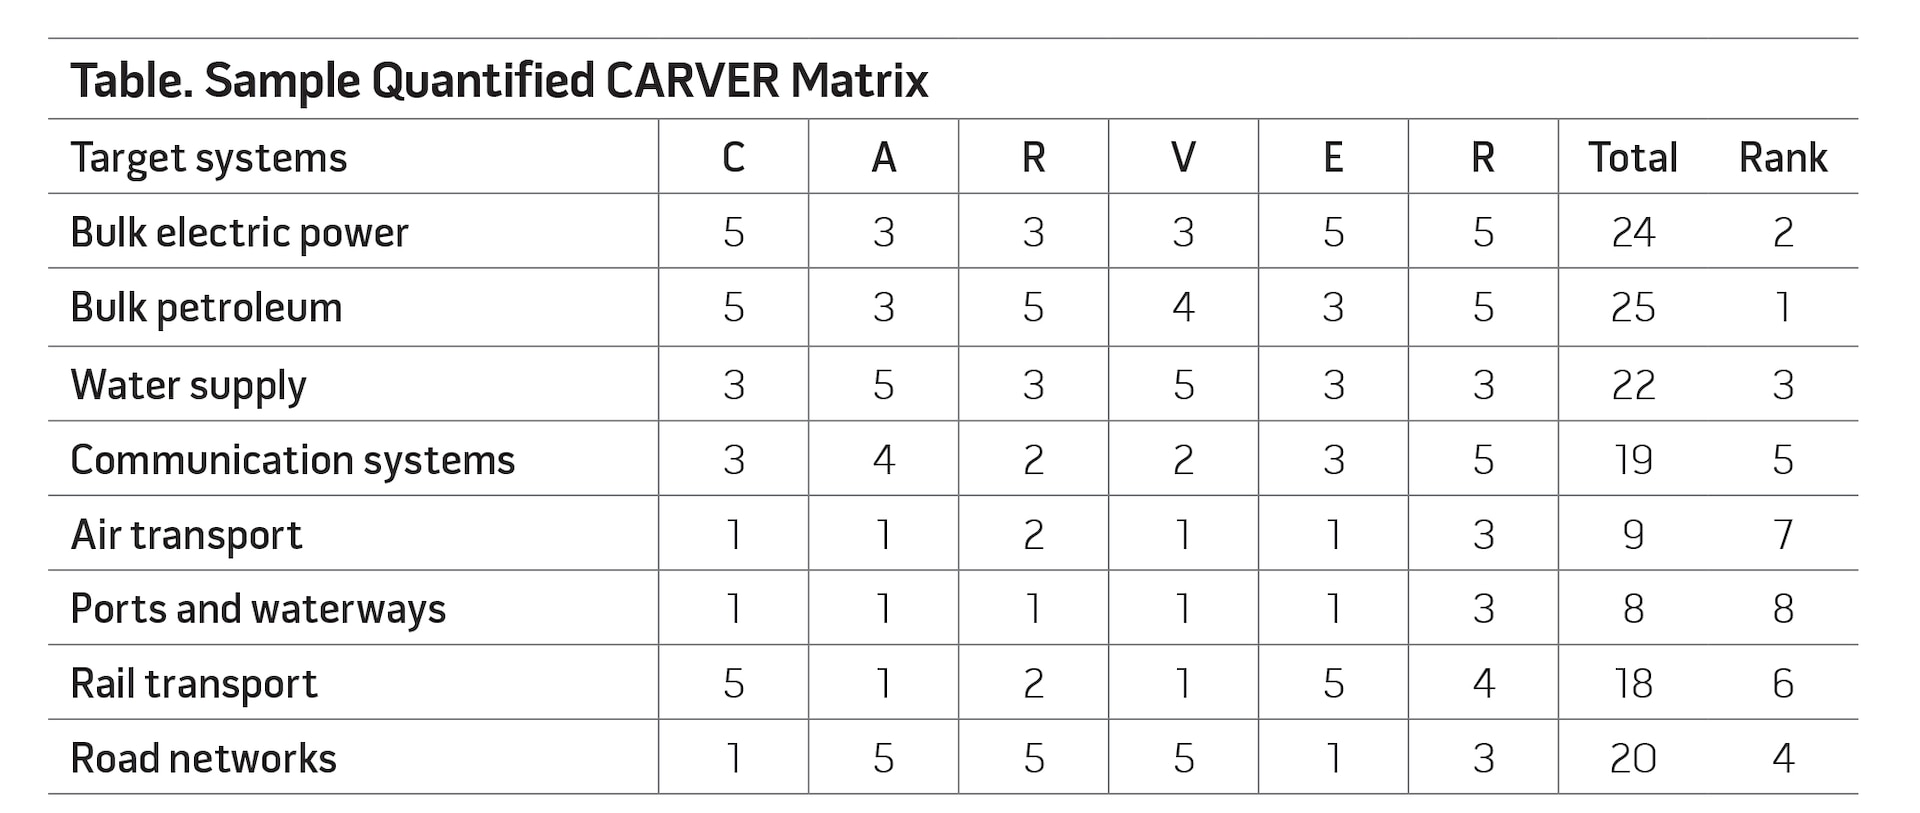 Table. Sample Quantified CARVER Matrix